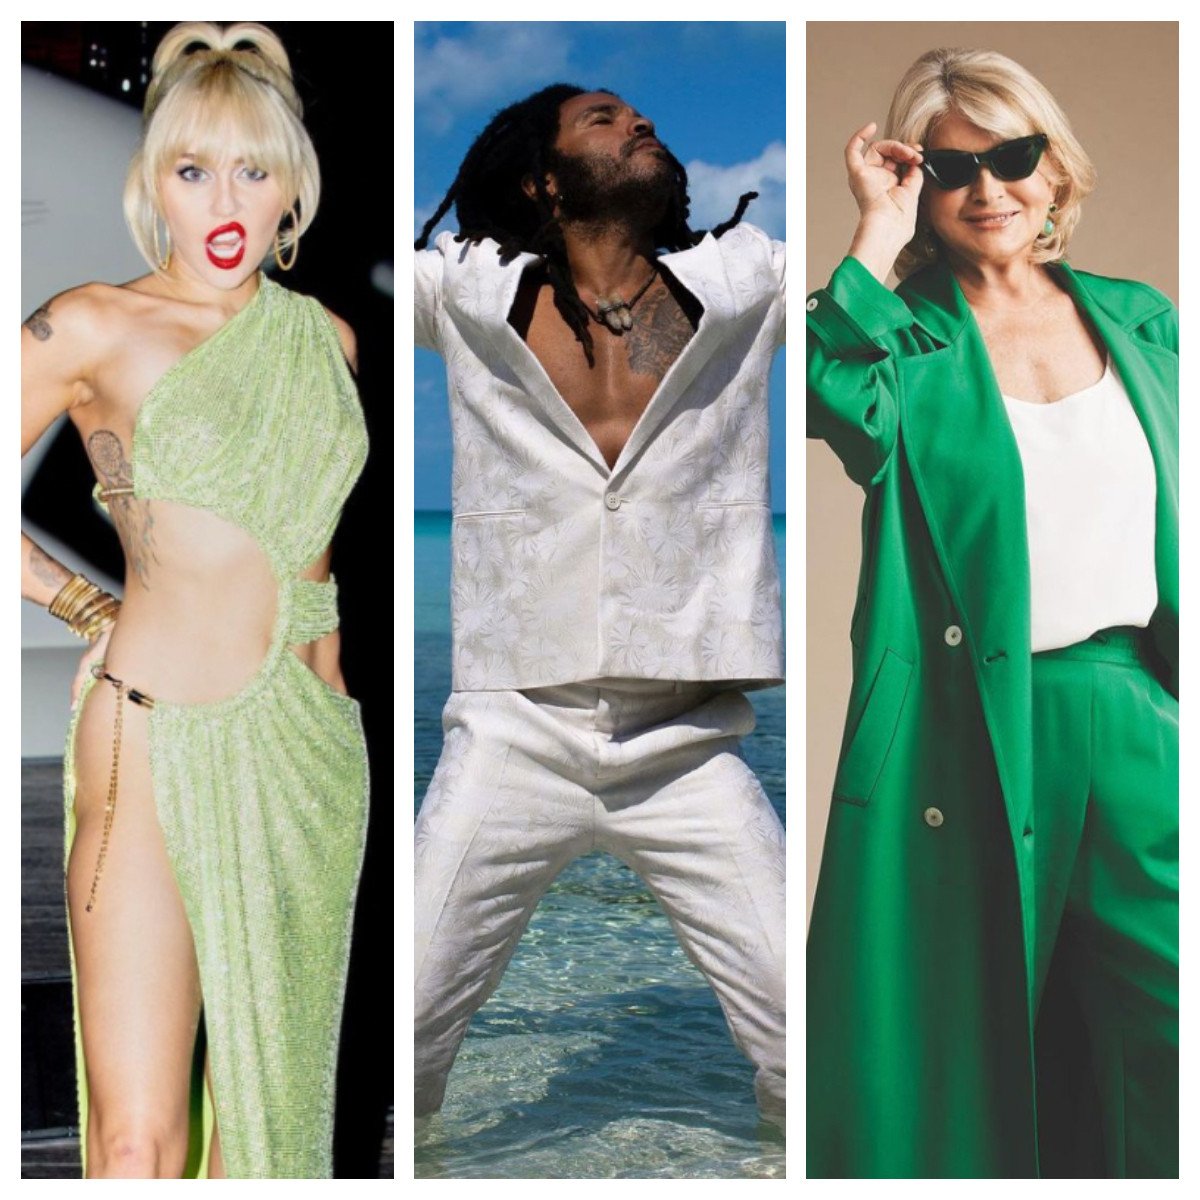 From Miley Cyrus to Lenny Kravitz and Martha Stewart, here are some celebrities who have gone commando and liked it. Photos: @myleycyrus, @lennykravitz, 
@marthastewart/Instagram